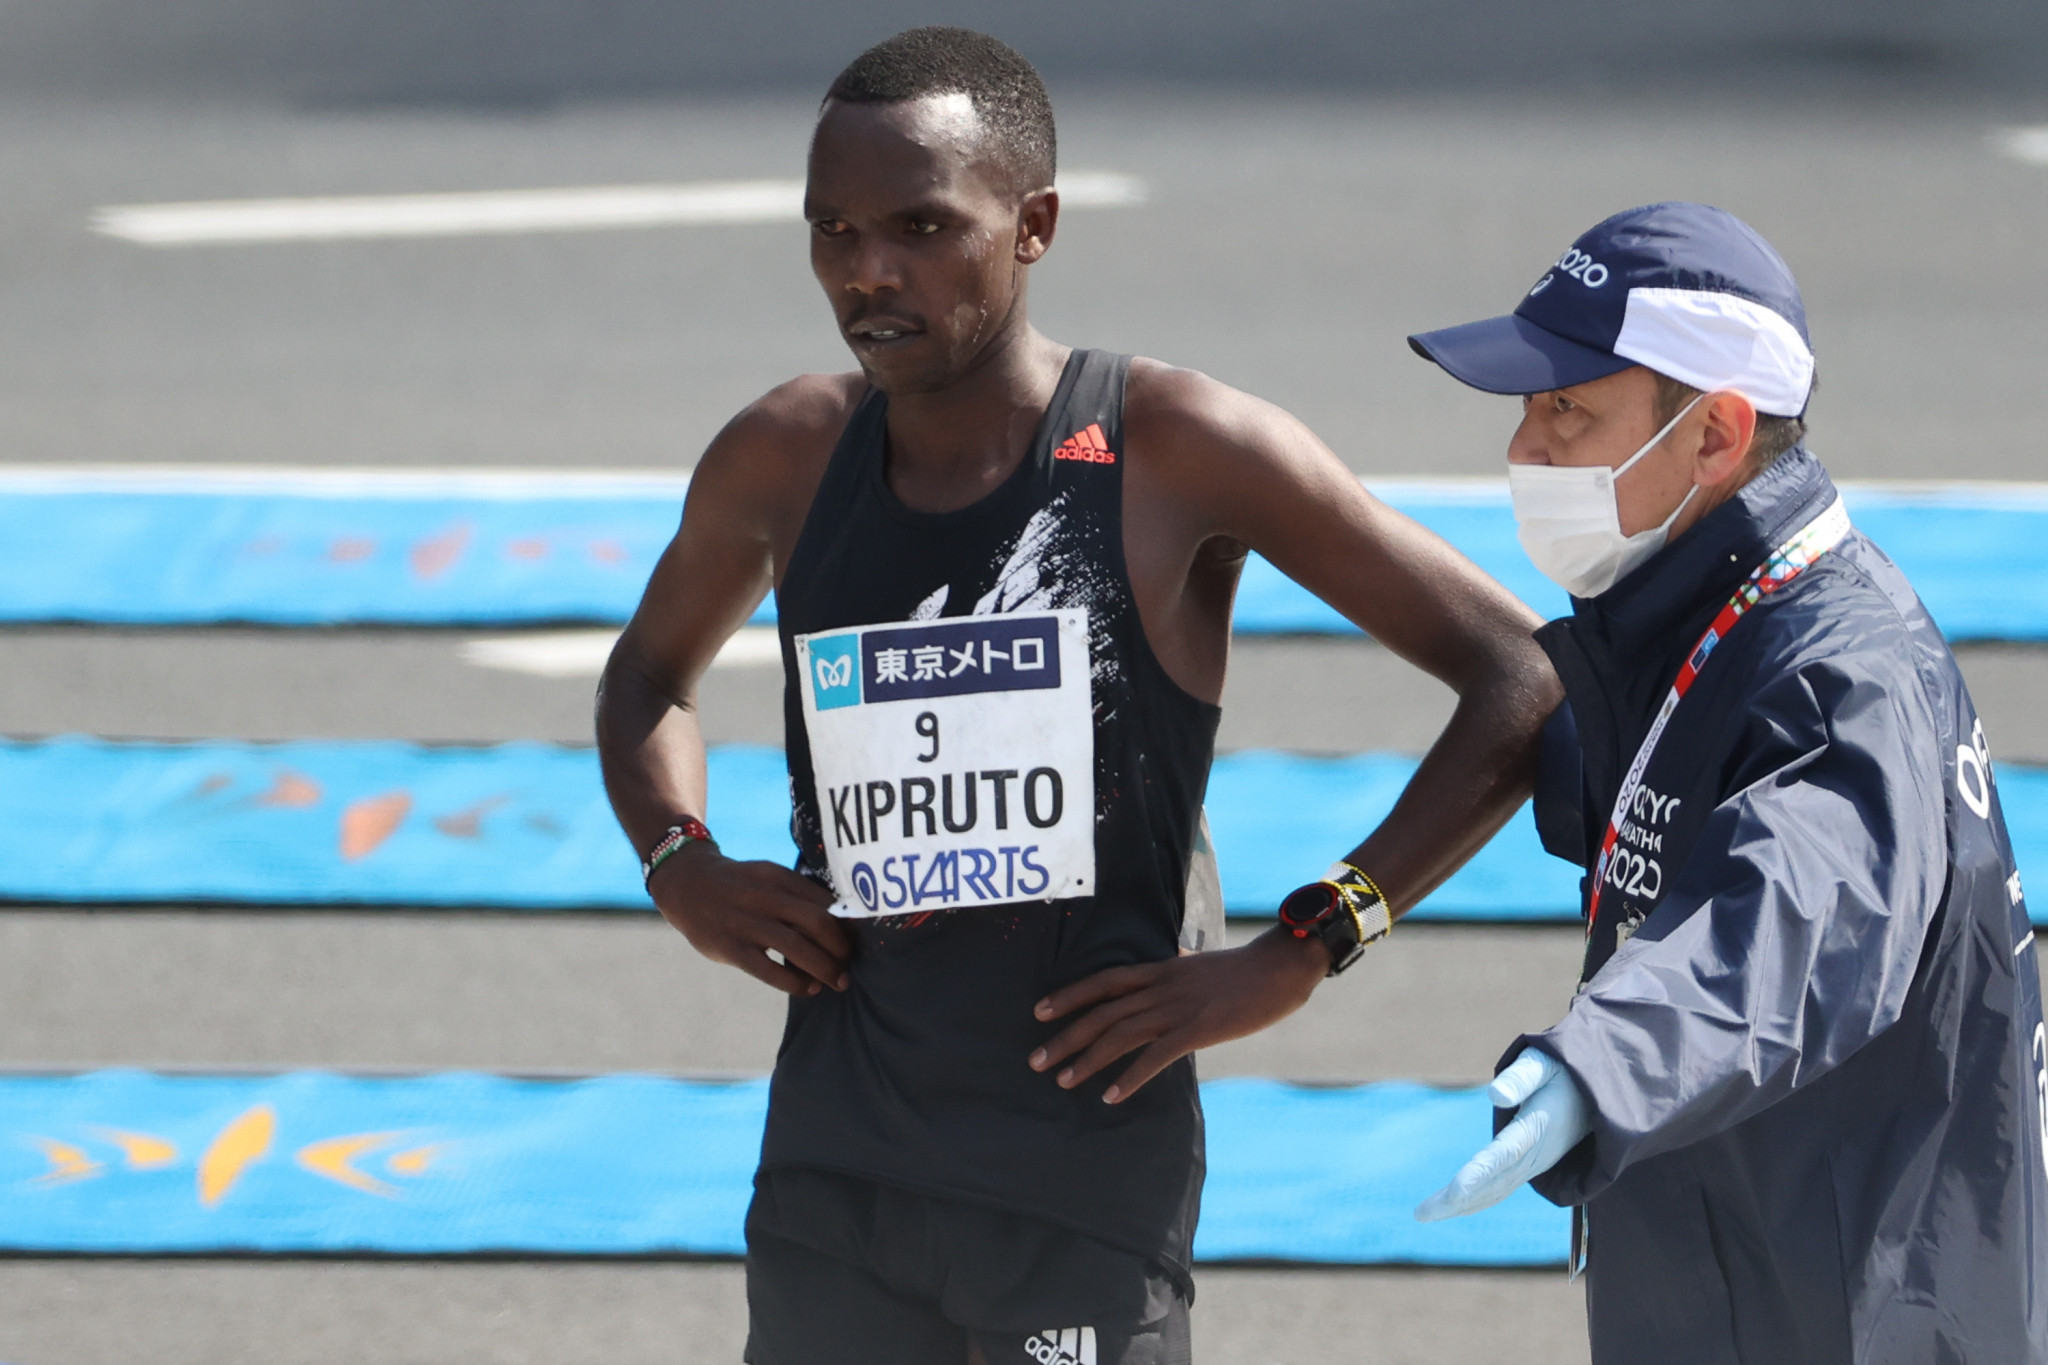 Amos Kipruto claimed the Kenyan team at the Valencia Marathon was 